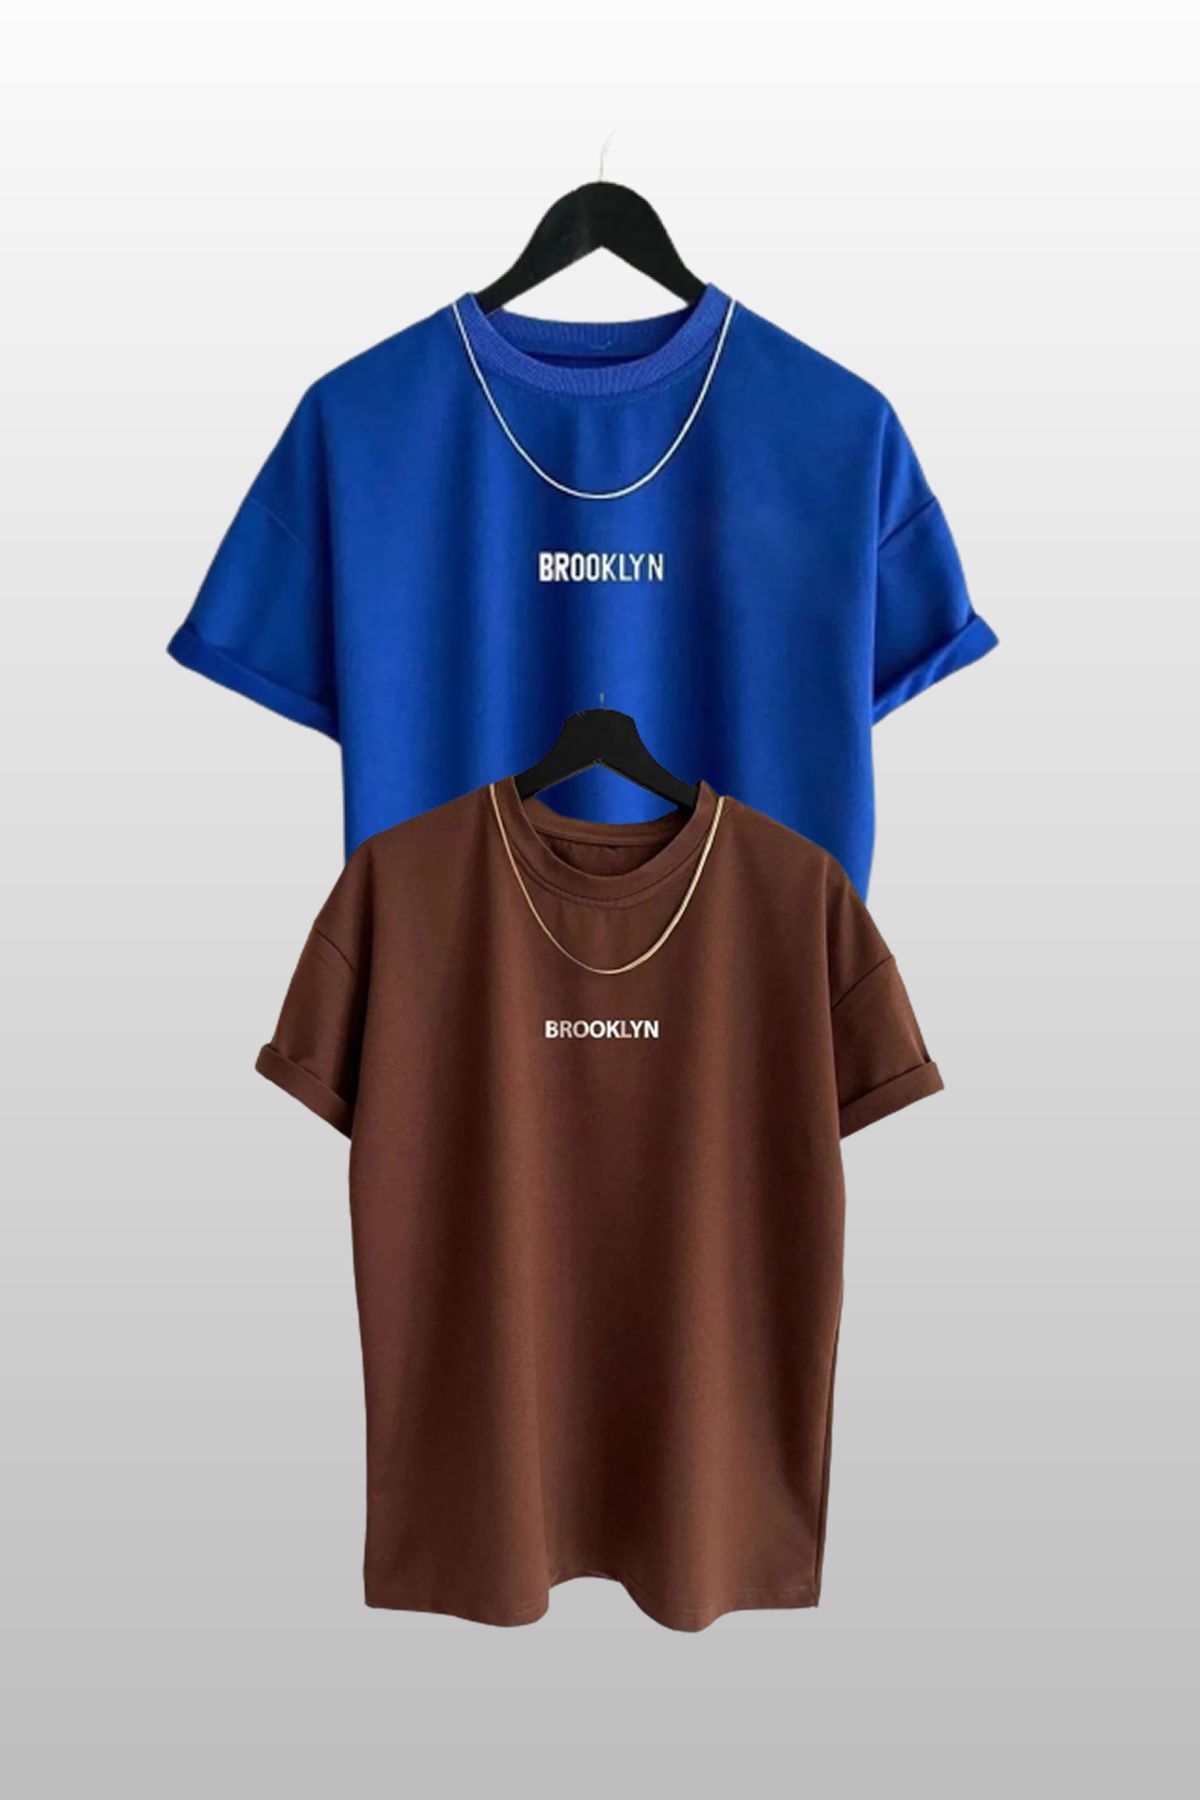 MODAGEN Unisex Brooklyn Baskılı 2li Paket Mavi-Kahve T-shirt